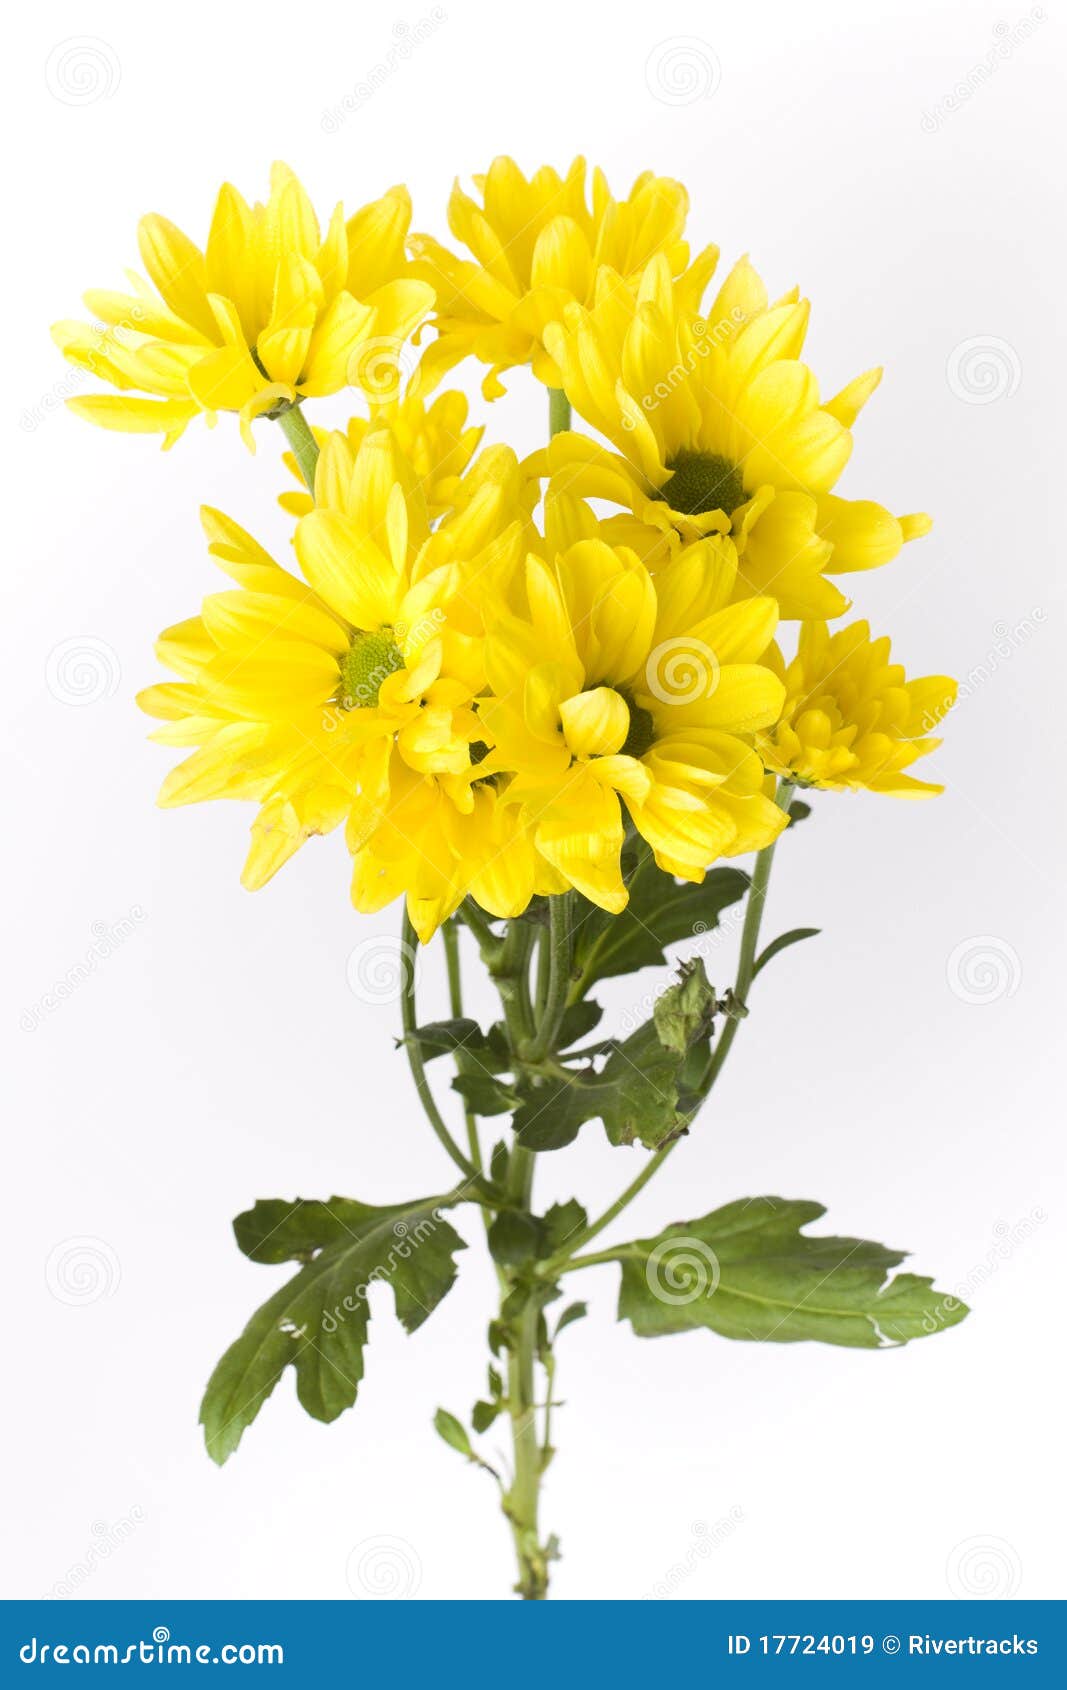 yellow geranium flowers with stems